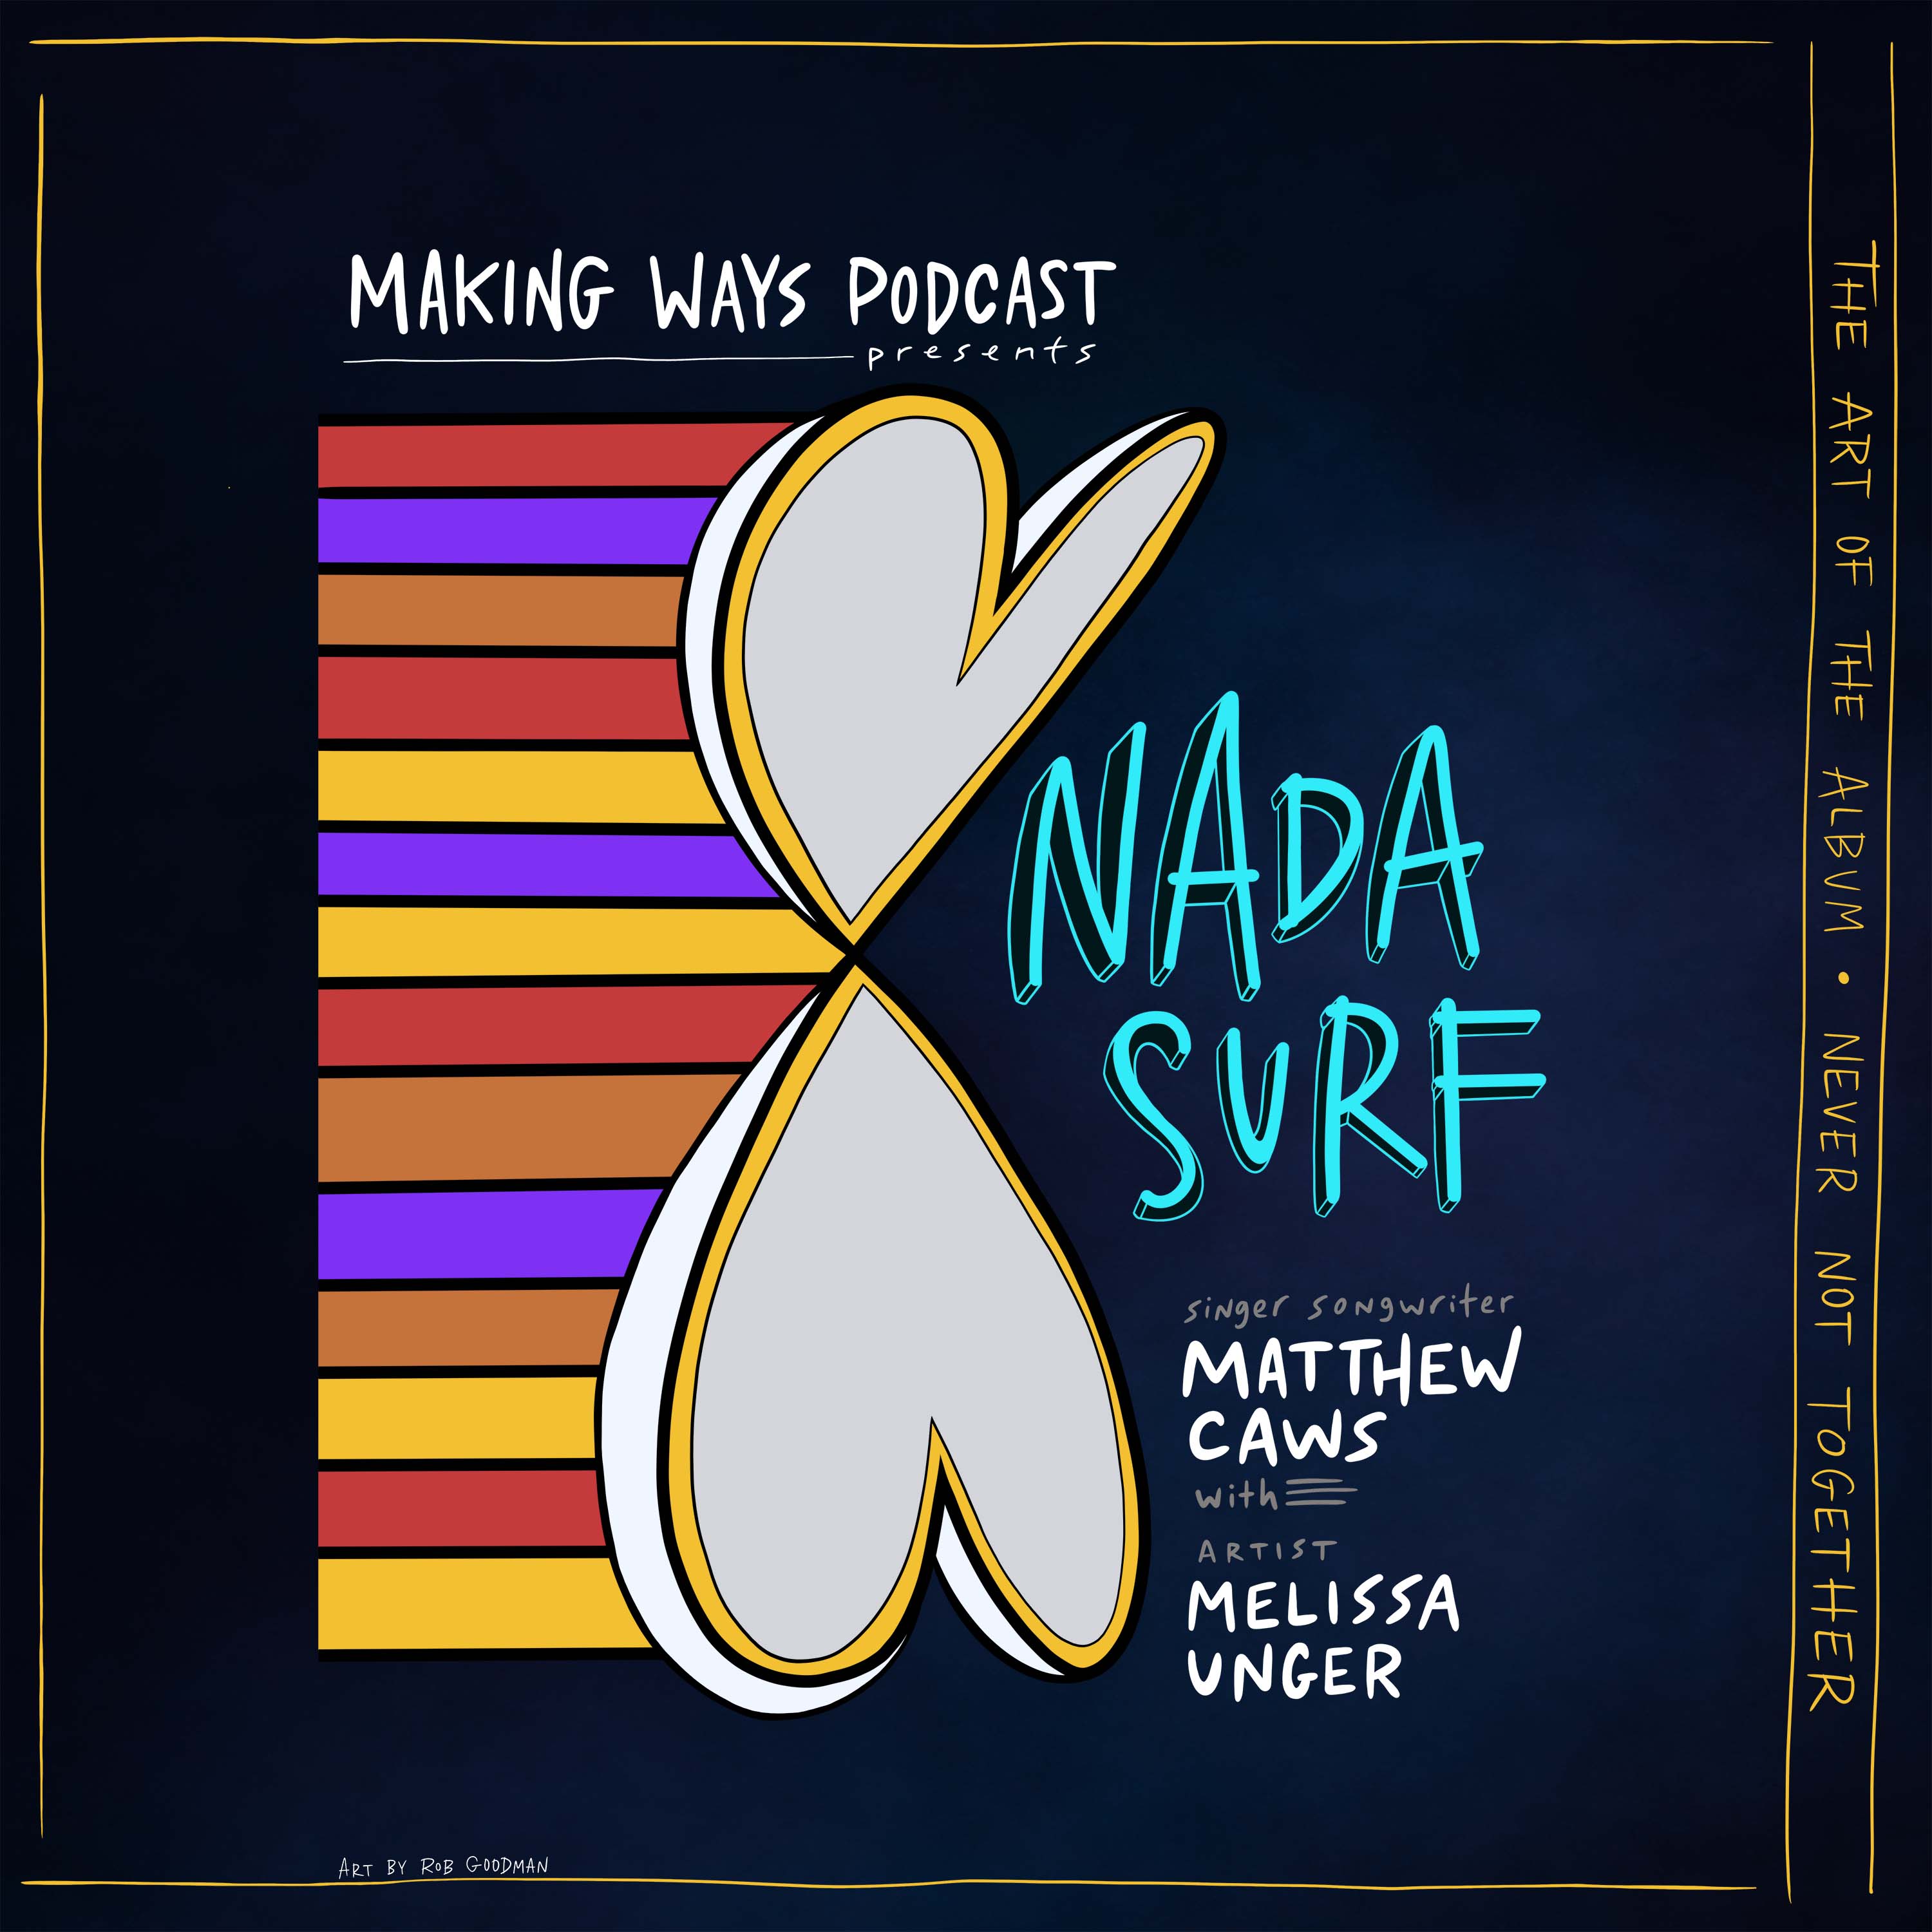 Nada Surf with Matthew Caws and artist Melissa Unger